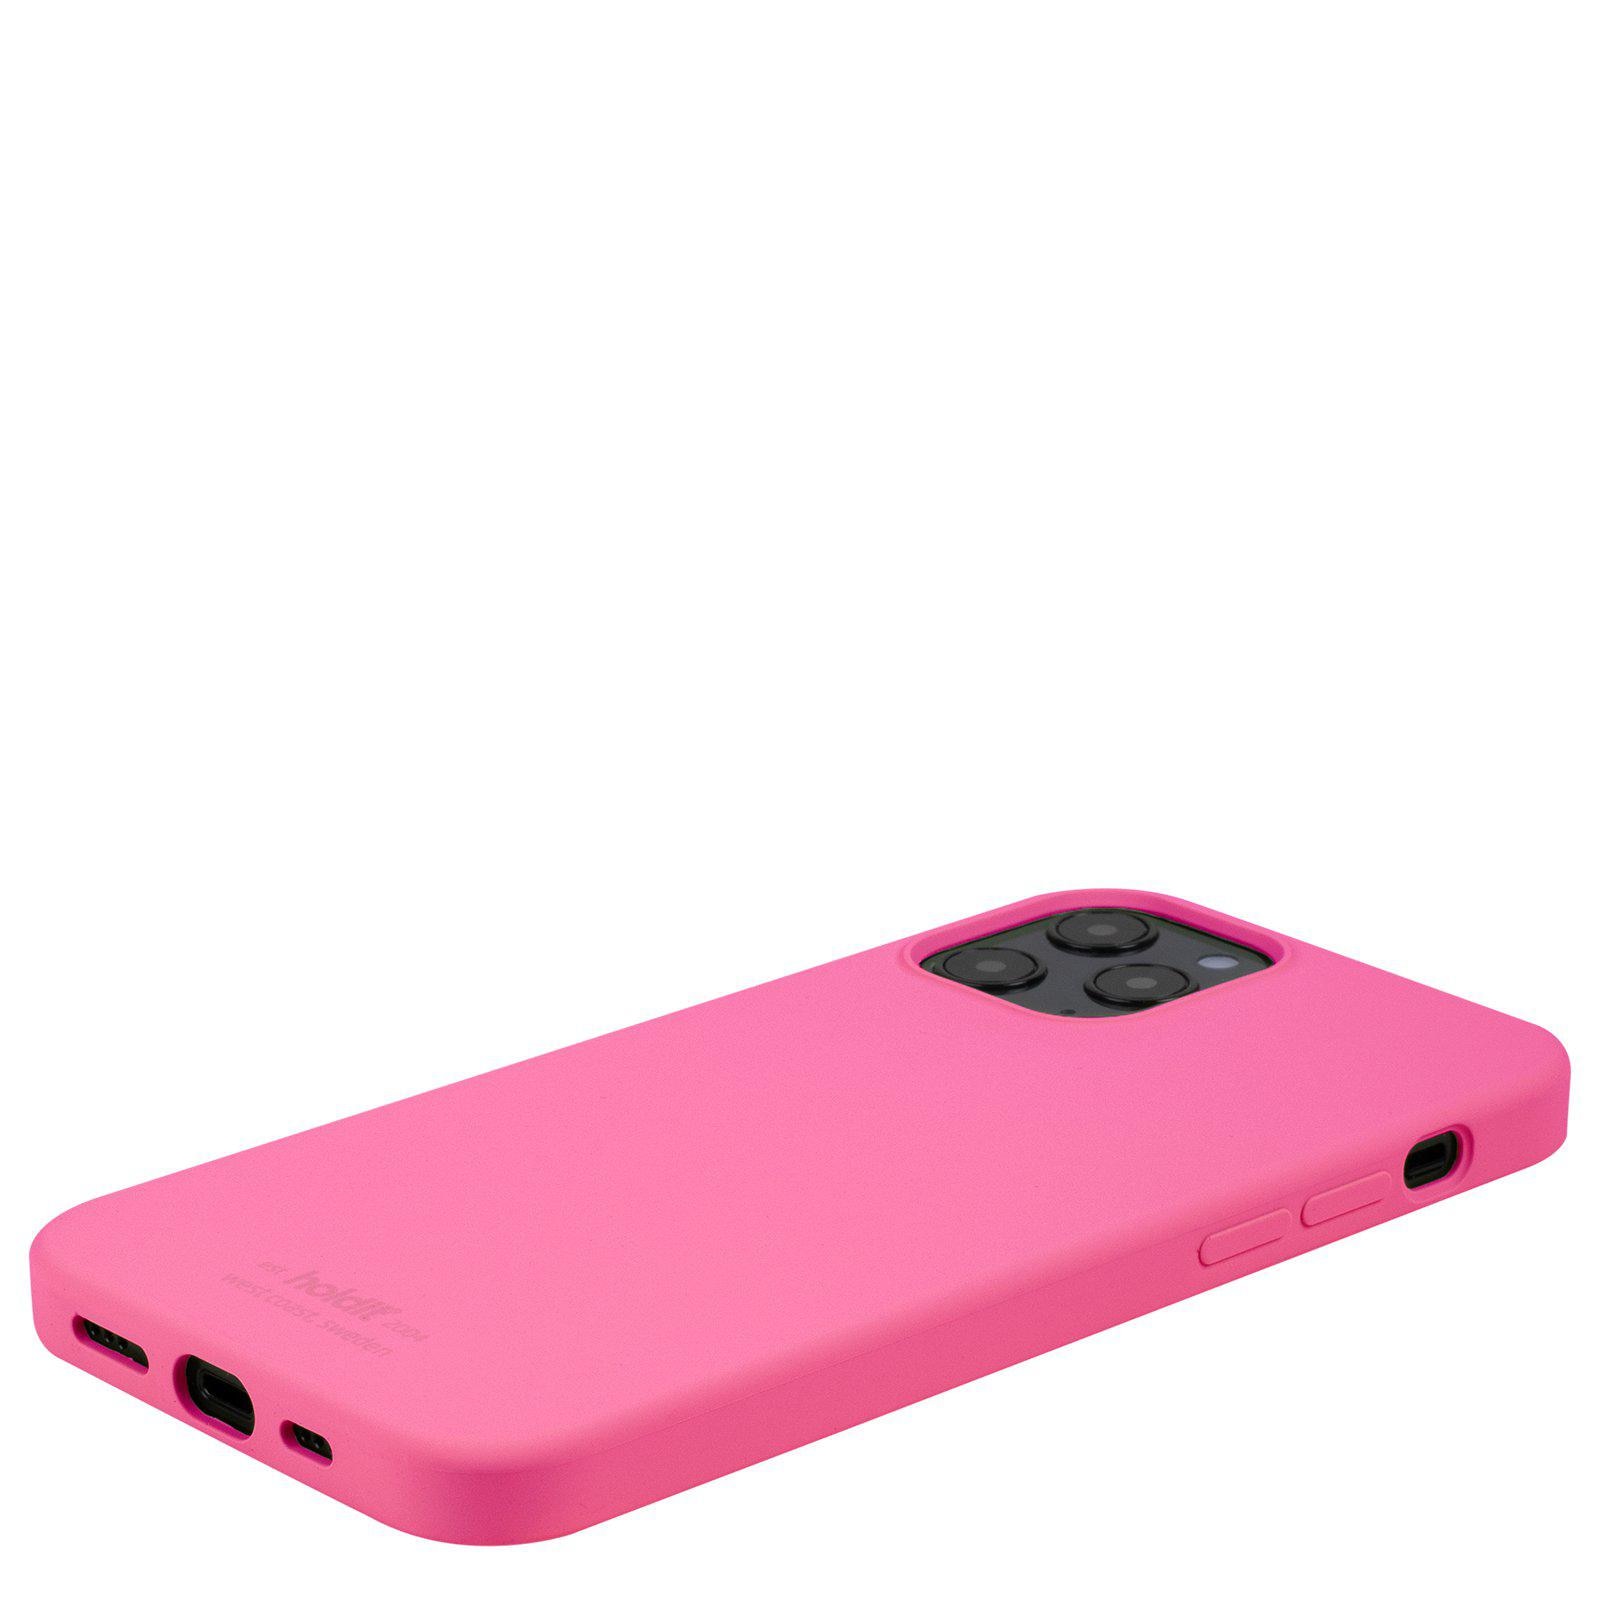 Silikonhülle iPhone 12/12 Pro Bright Pink